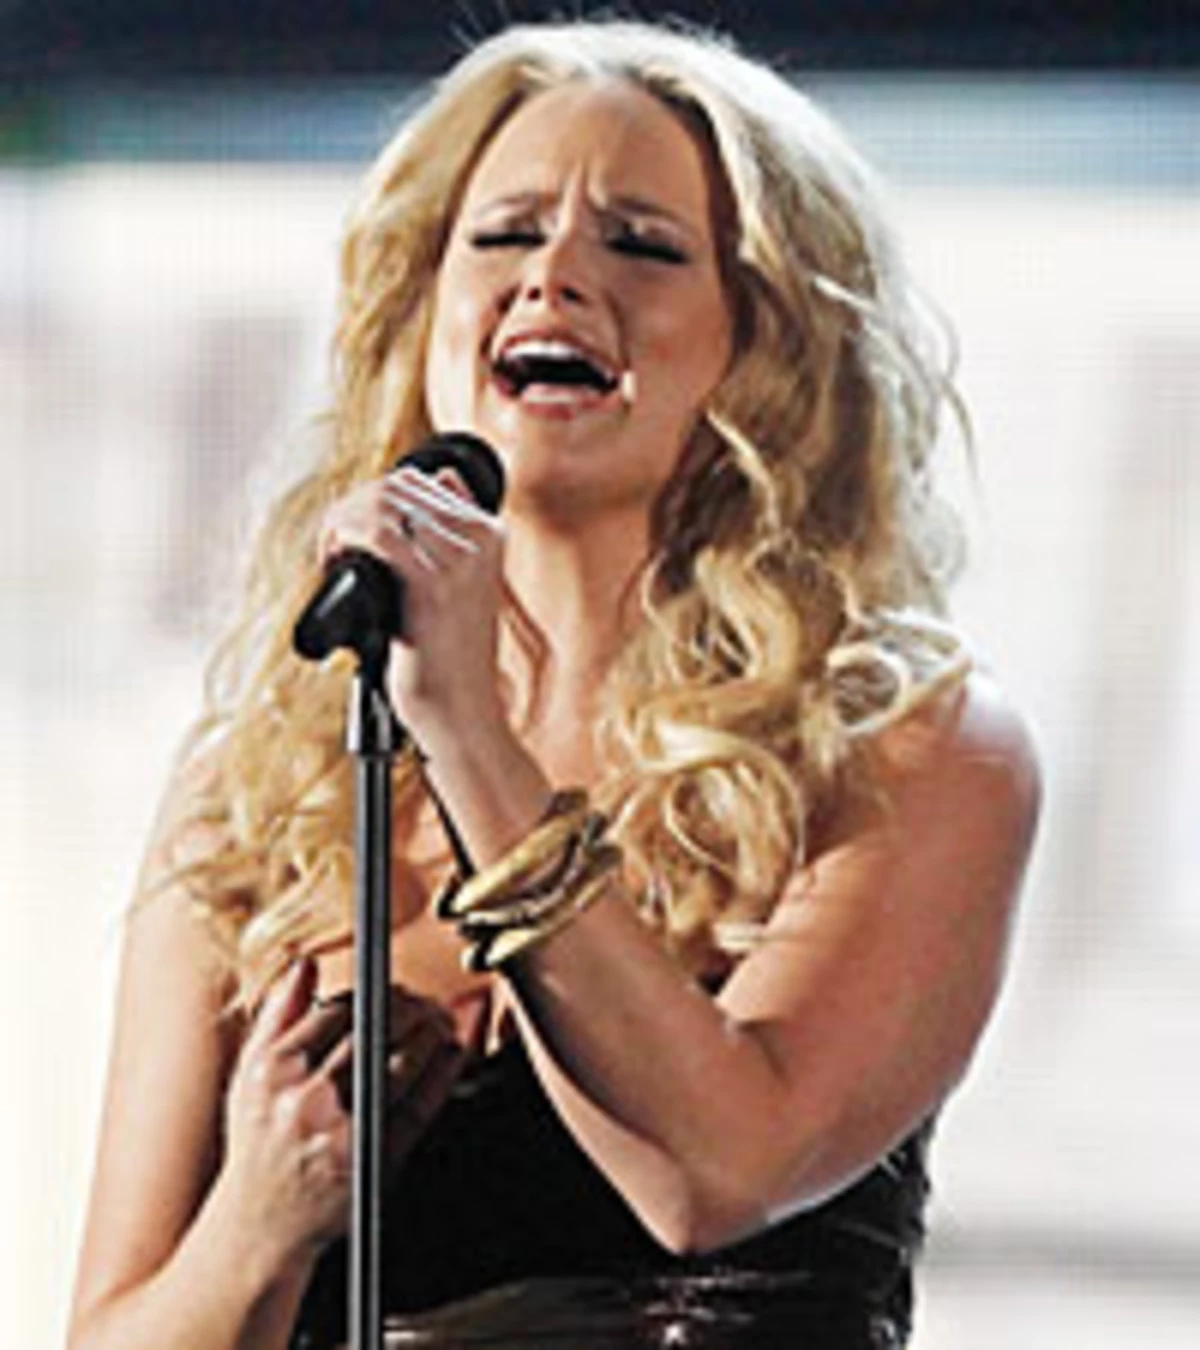 Miranda Lambert Brings Down the ‘House’ at Grammy Awards